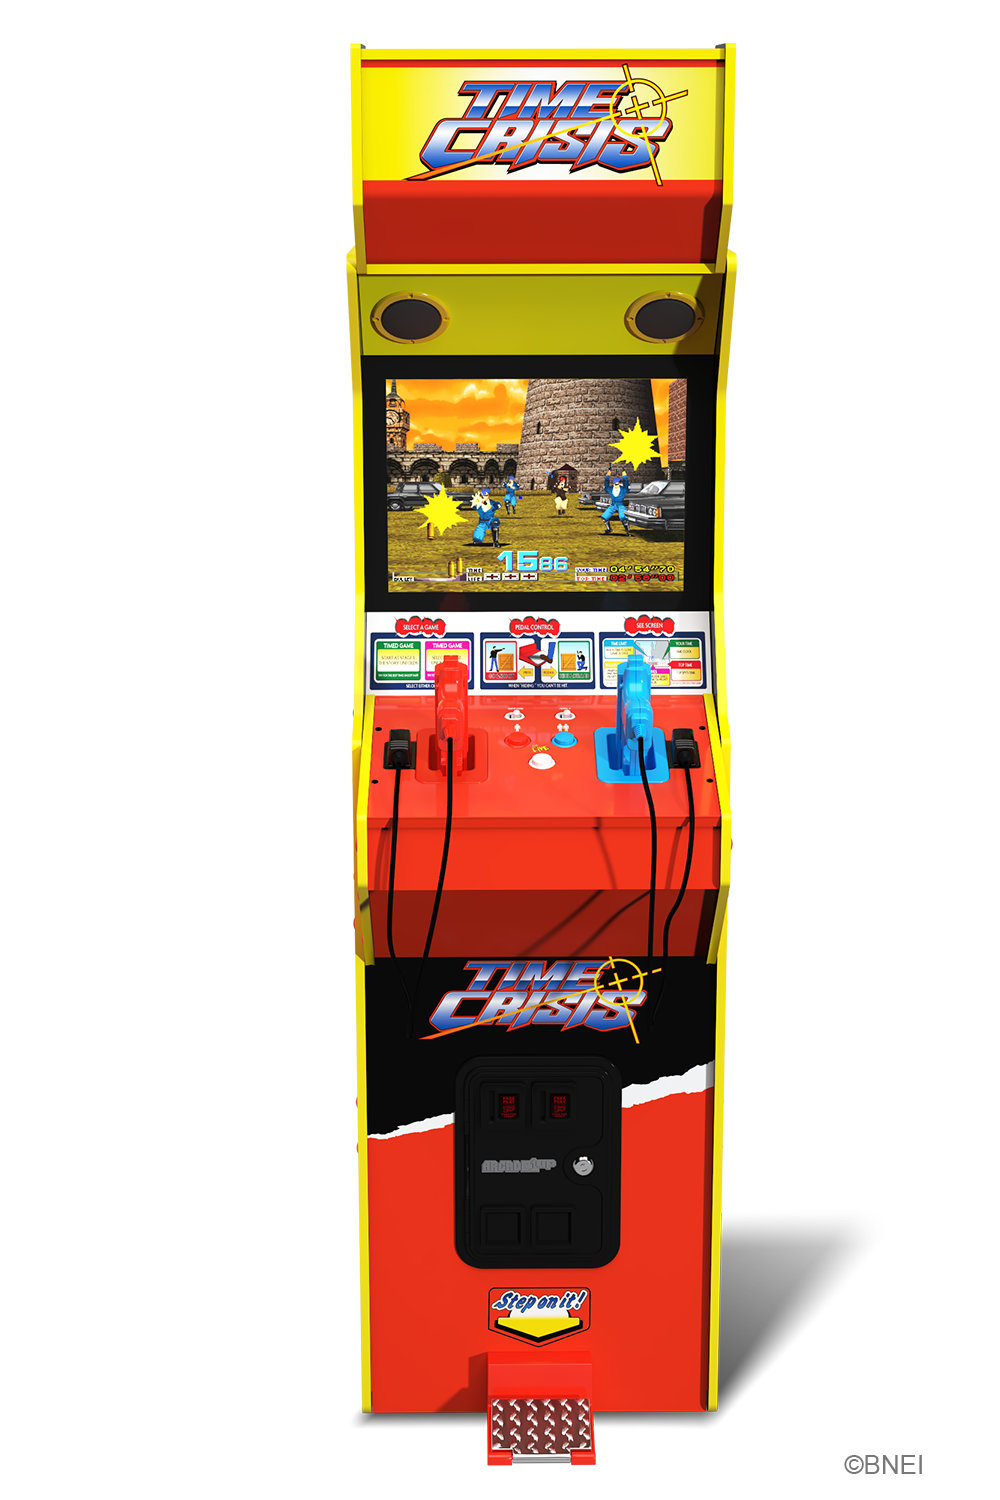 Capcom Legacy 35th Anniversary Arcade Game14-n-1 Shinku Hadoken